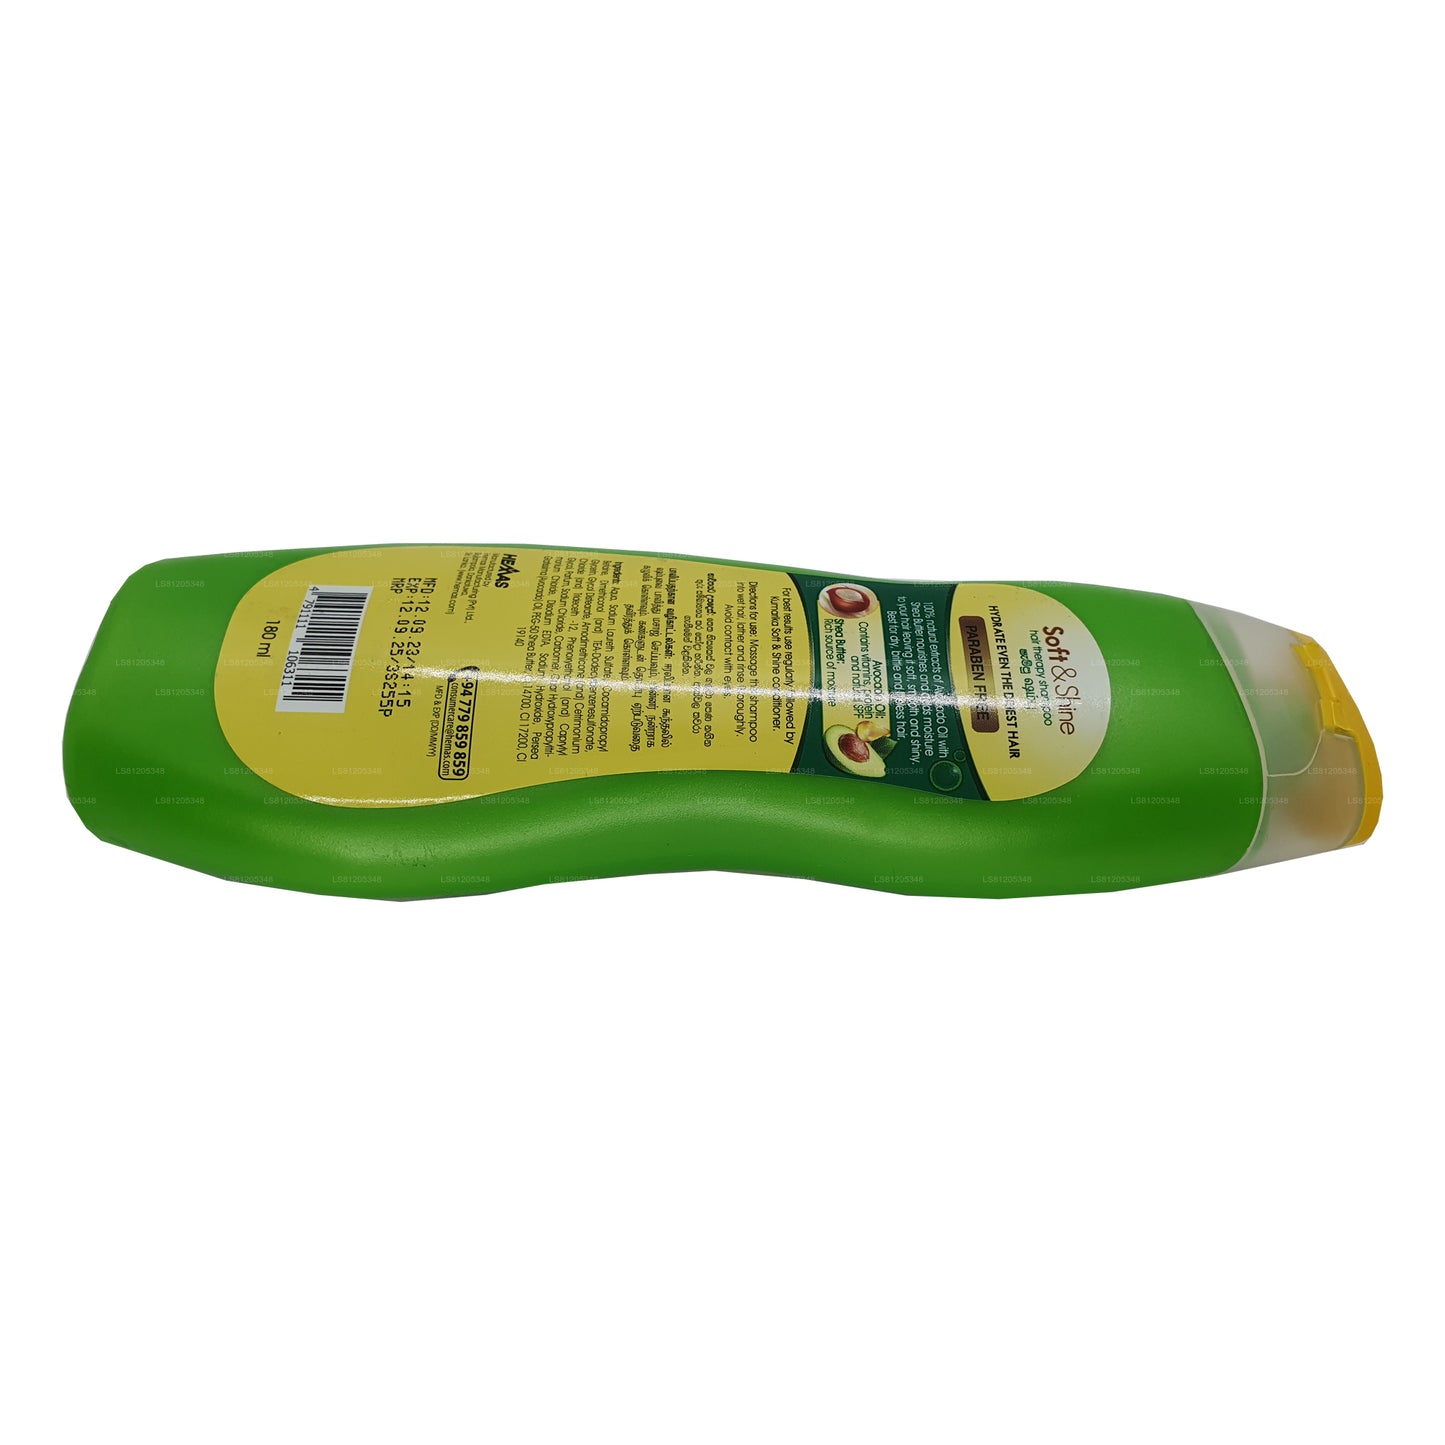 Kumarika Soft and Shine Haartherapie-Shampoo (180 ml)